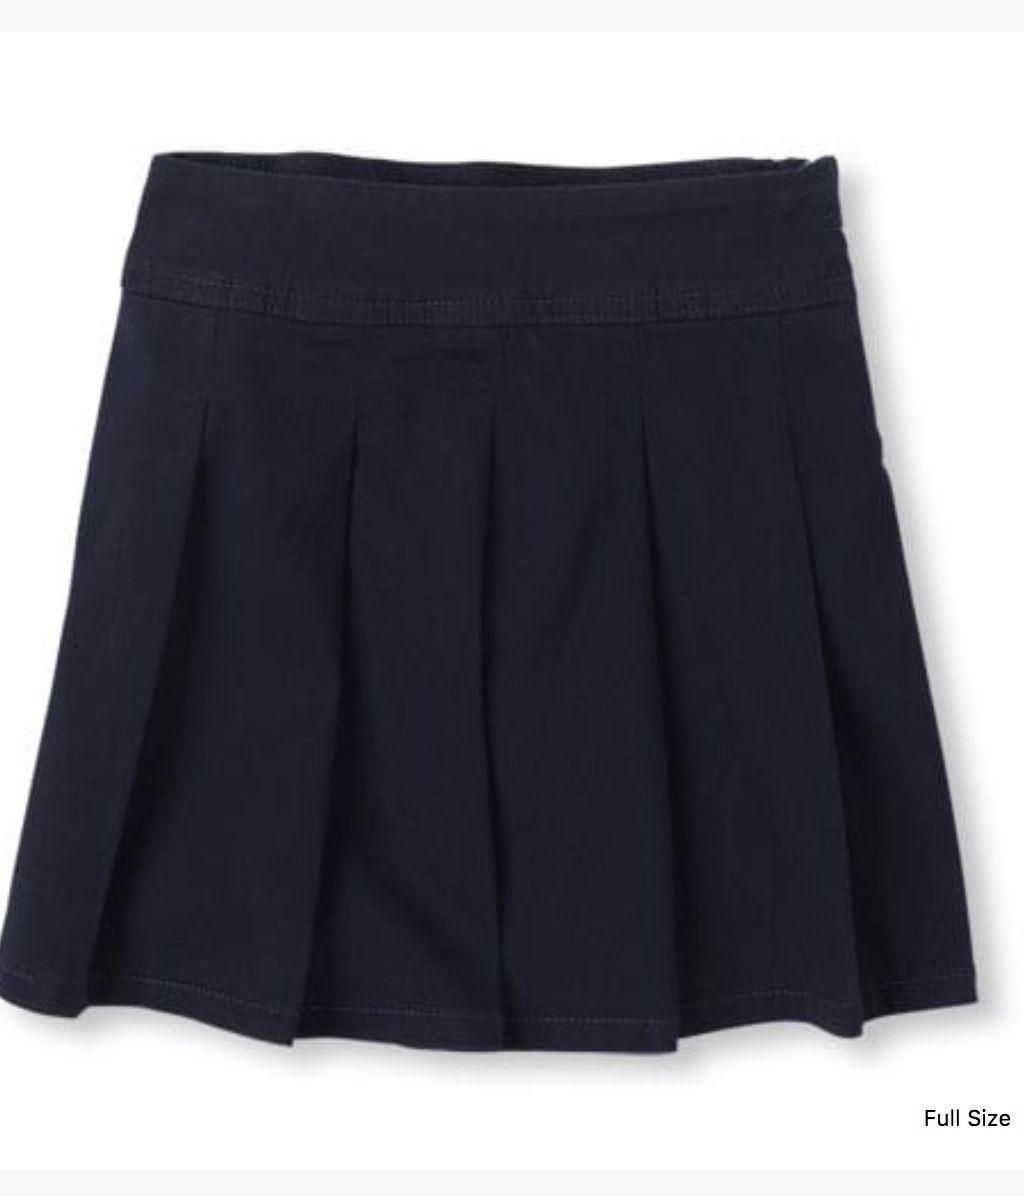 navy or khaki: 3 above knee or longer No knit material Leggings, shorts